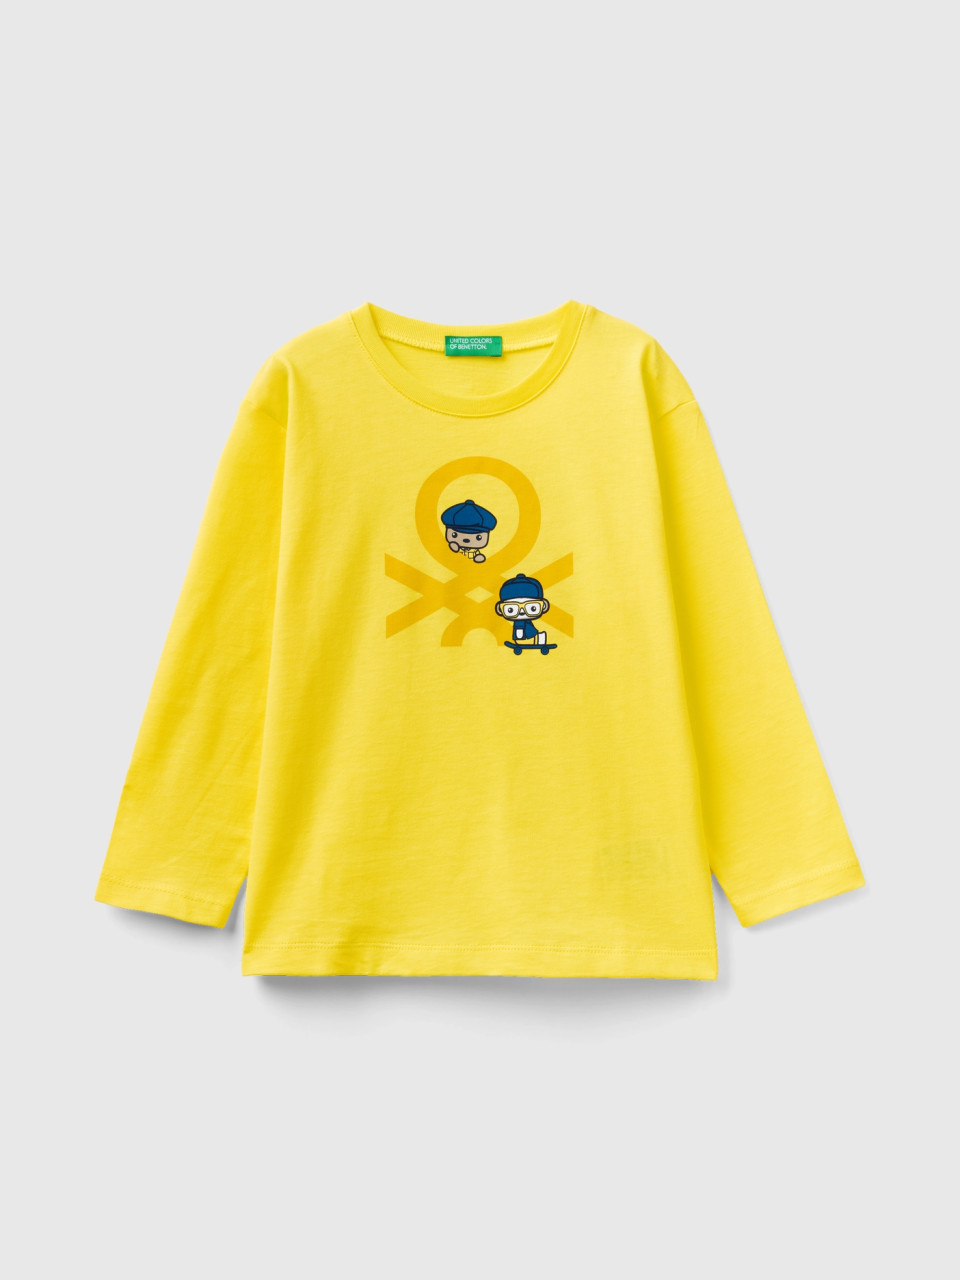 Benetton, Long Sleeve Organic Cotton T-shirt, Yellow, Kids